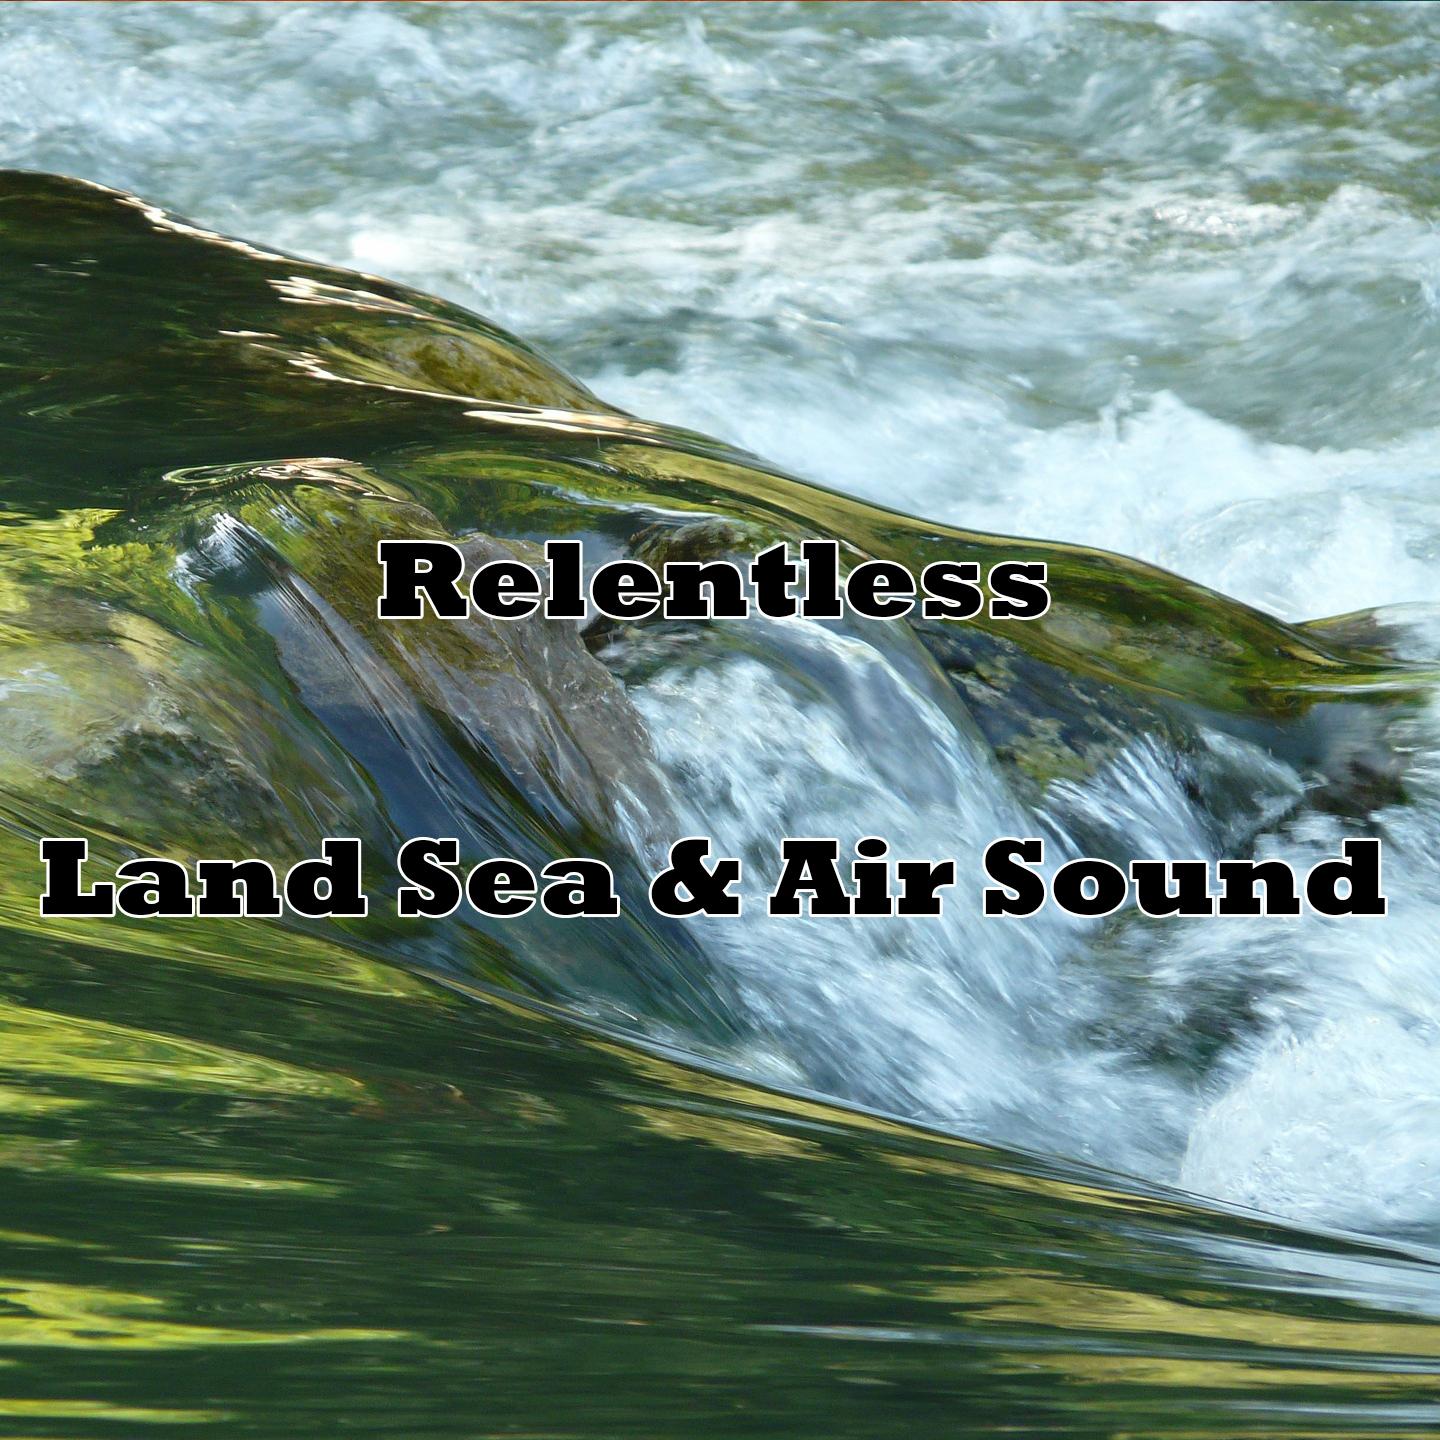 Relentless Land Sea & Air Sound